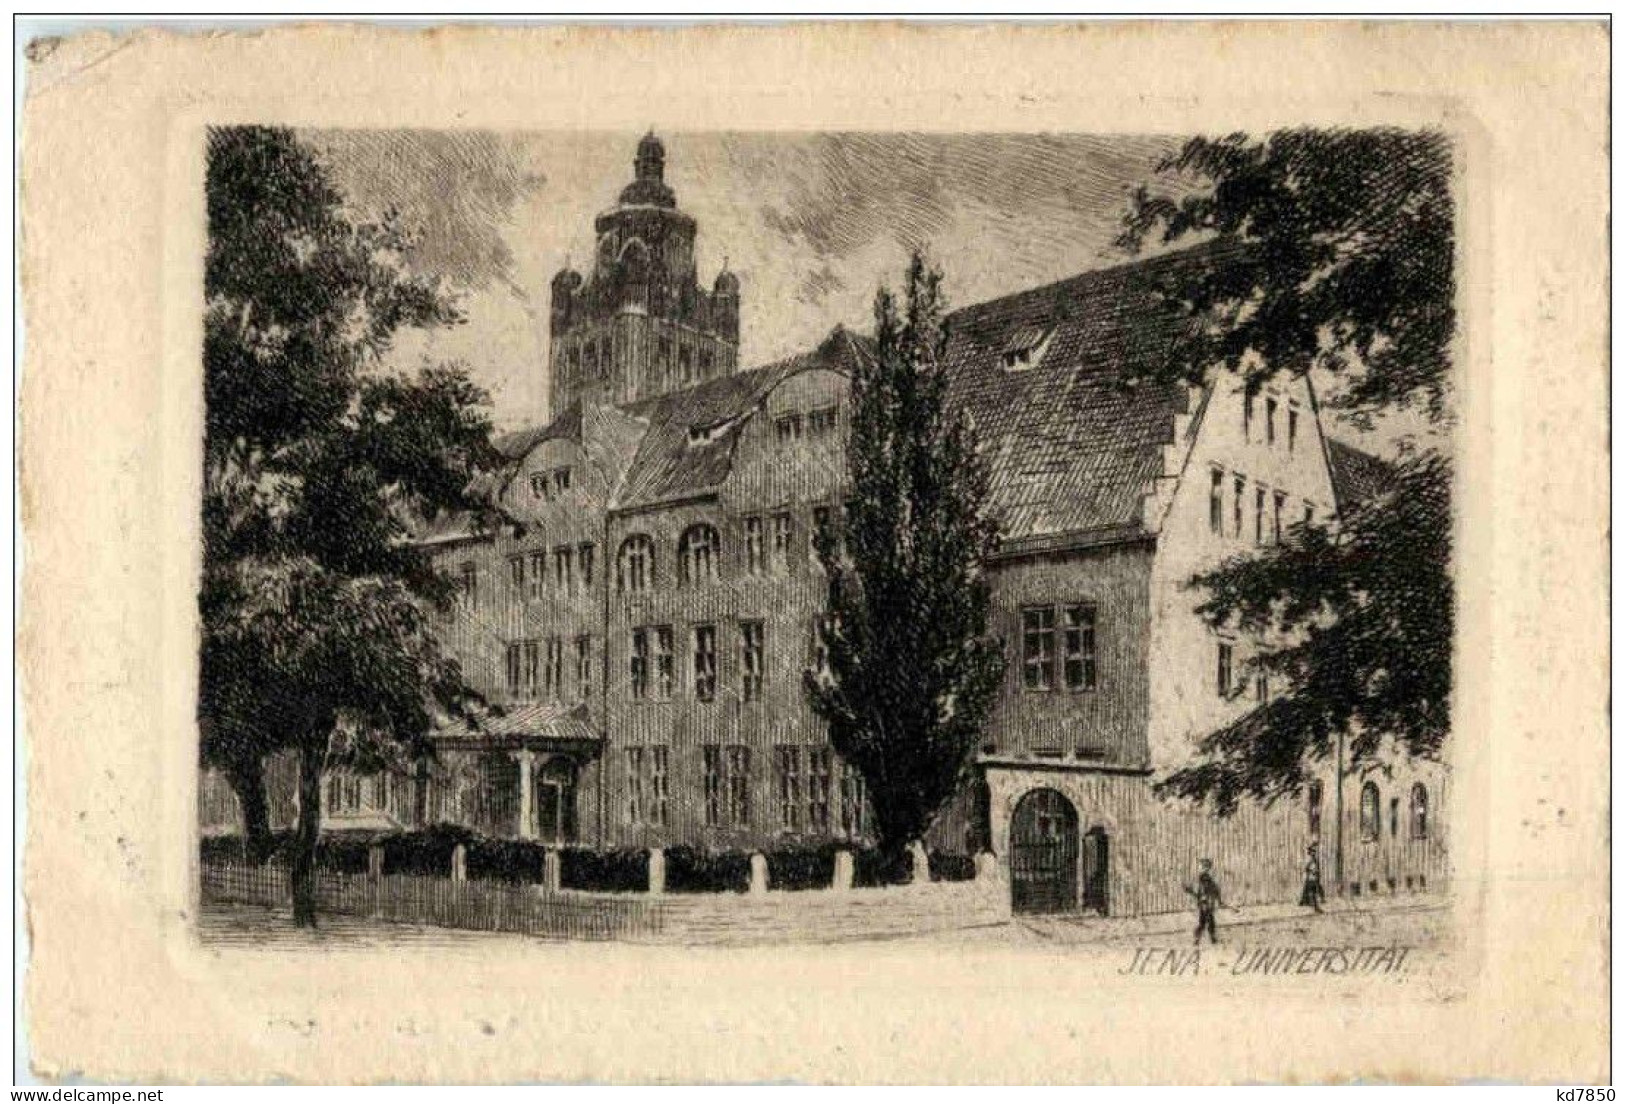 Jena - Universität - Jena